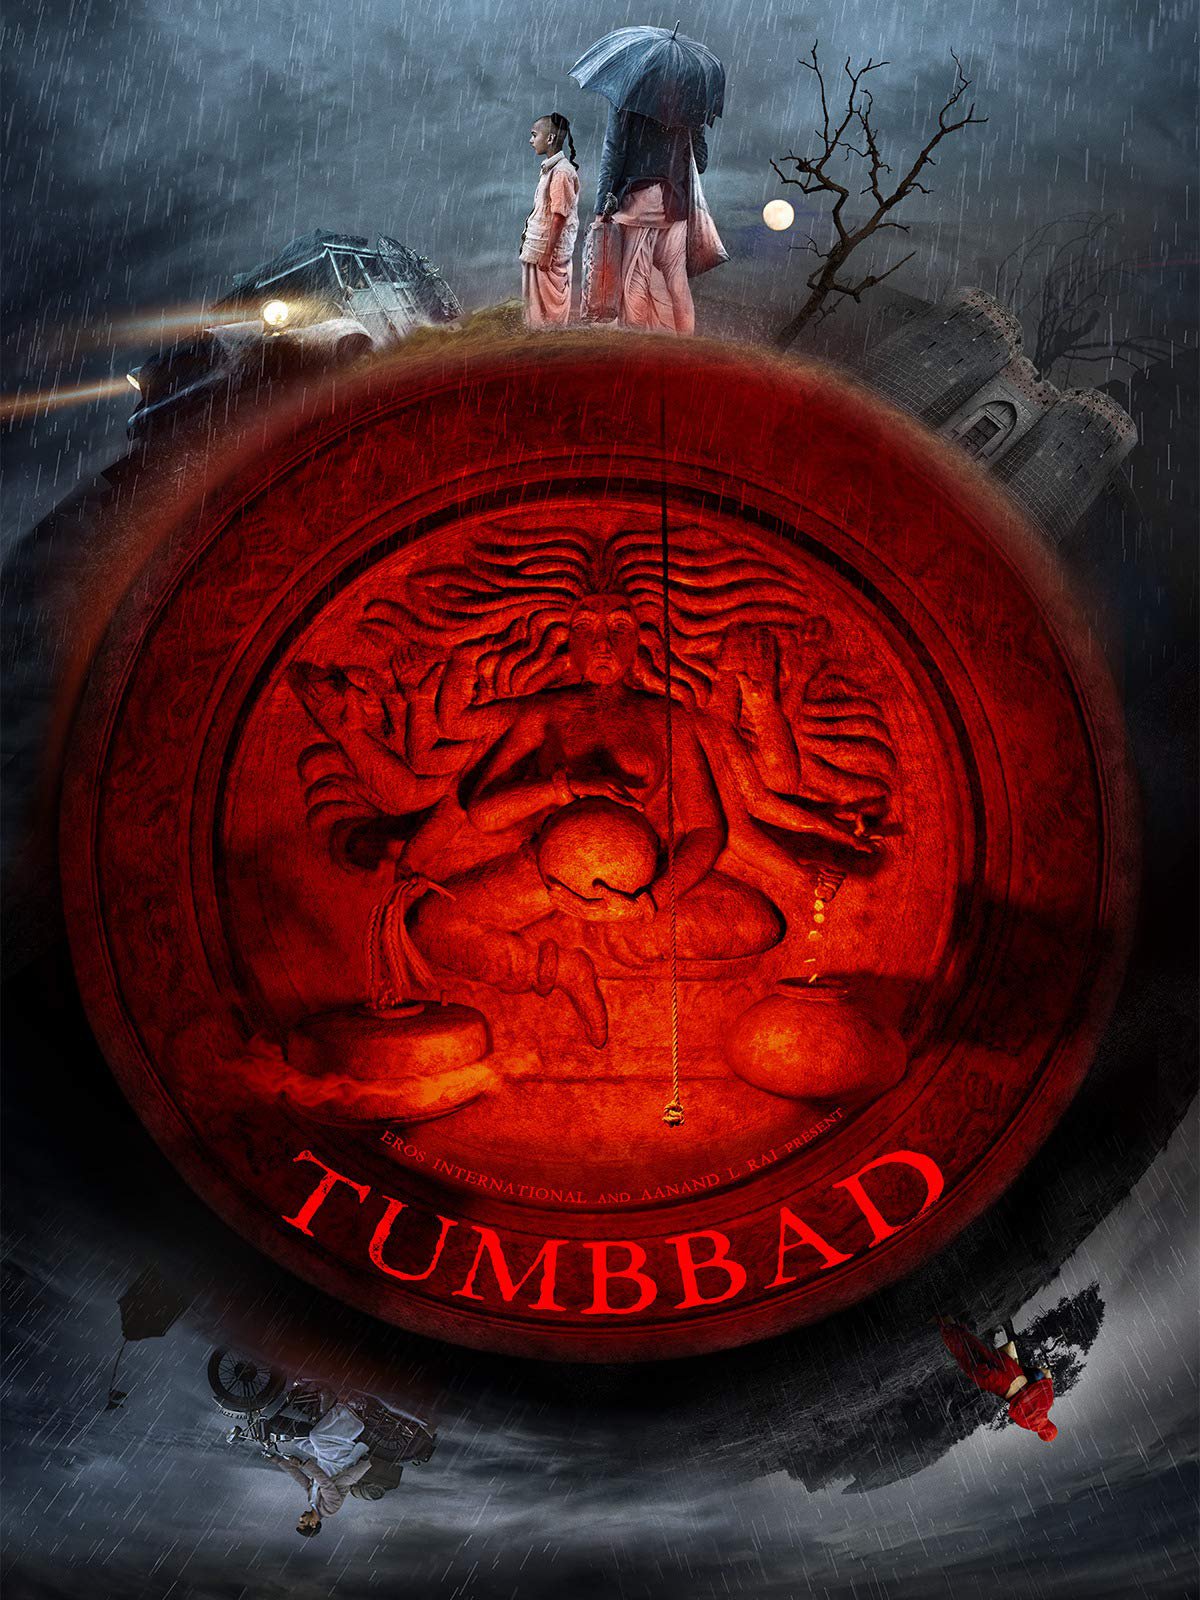 Tumbbad movie poster